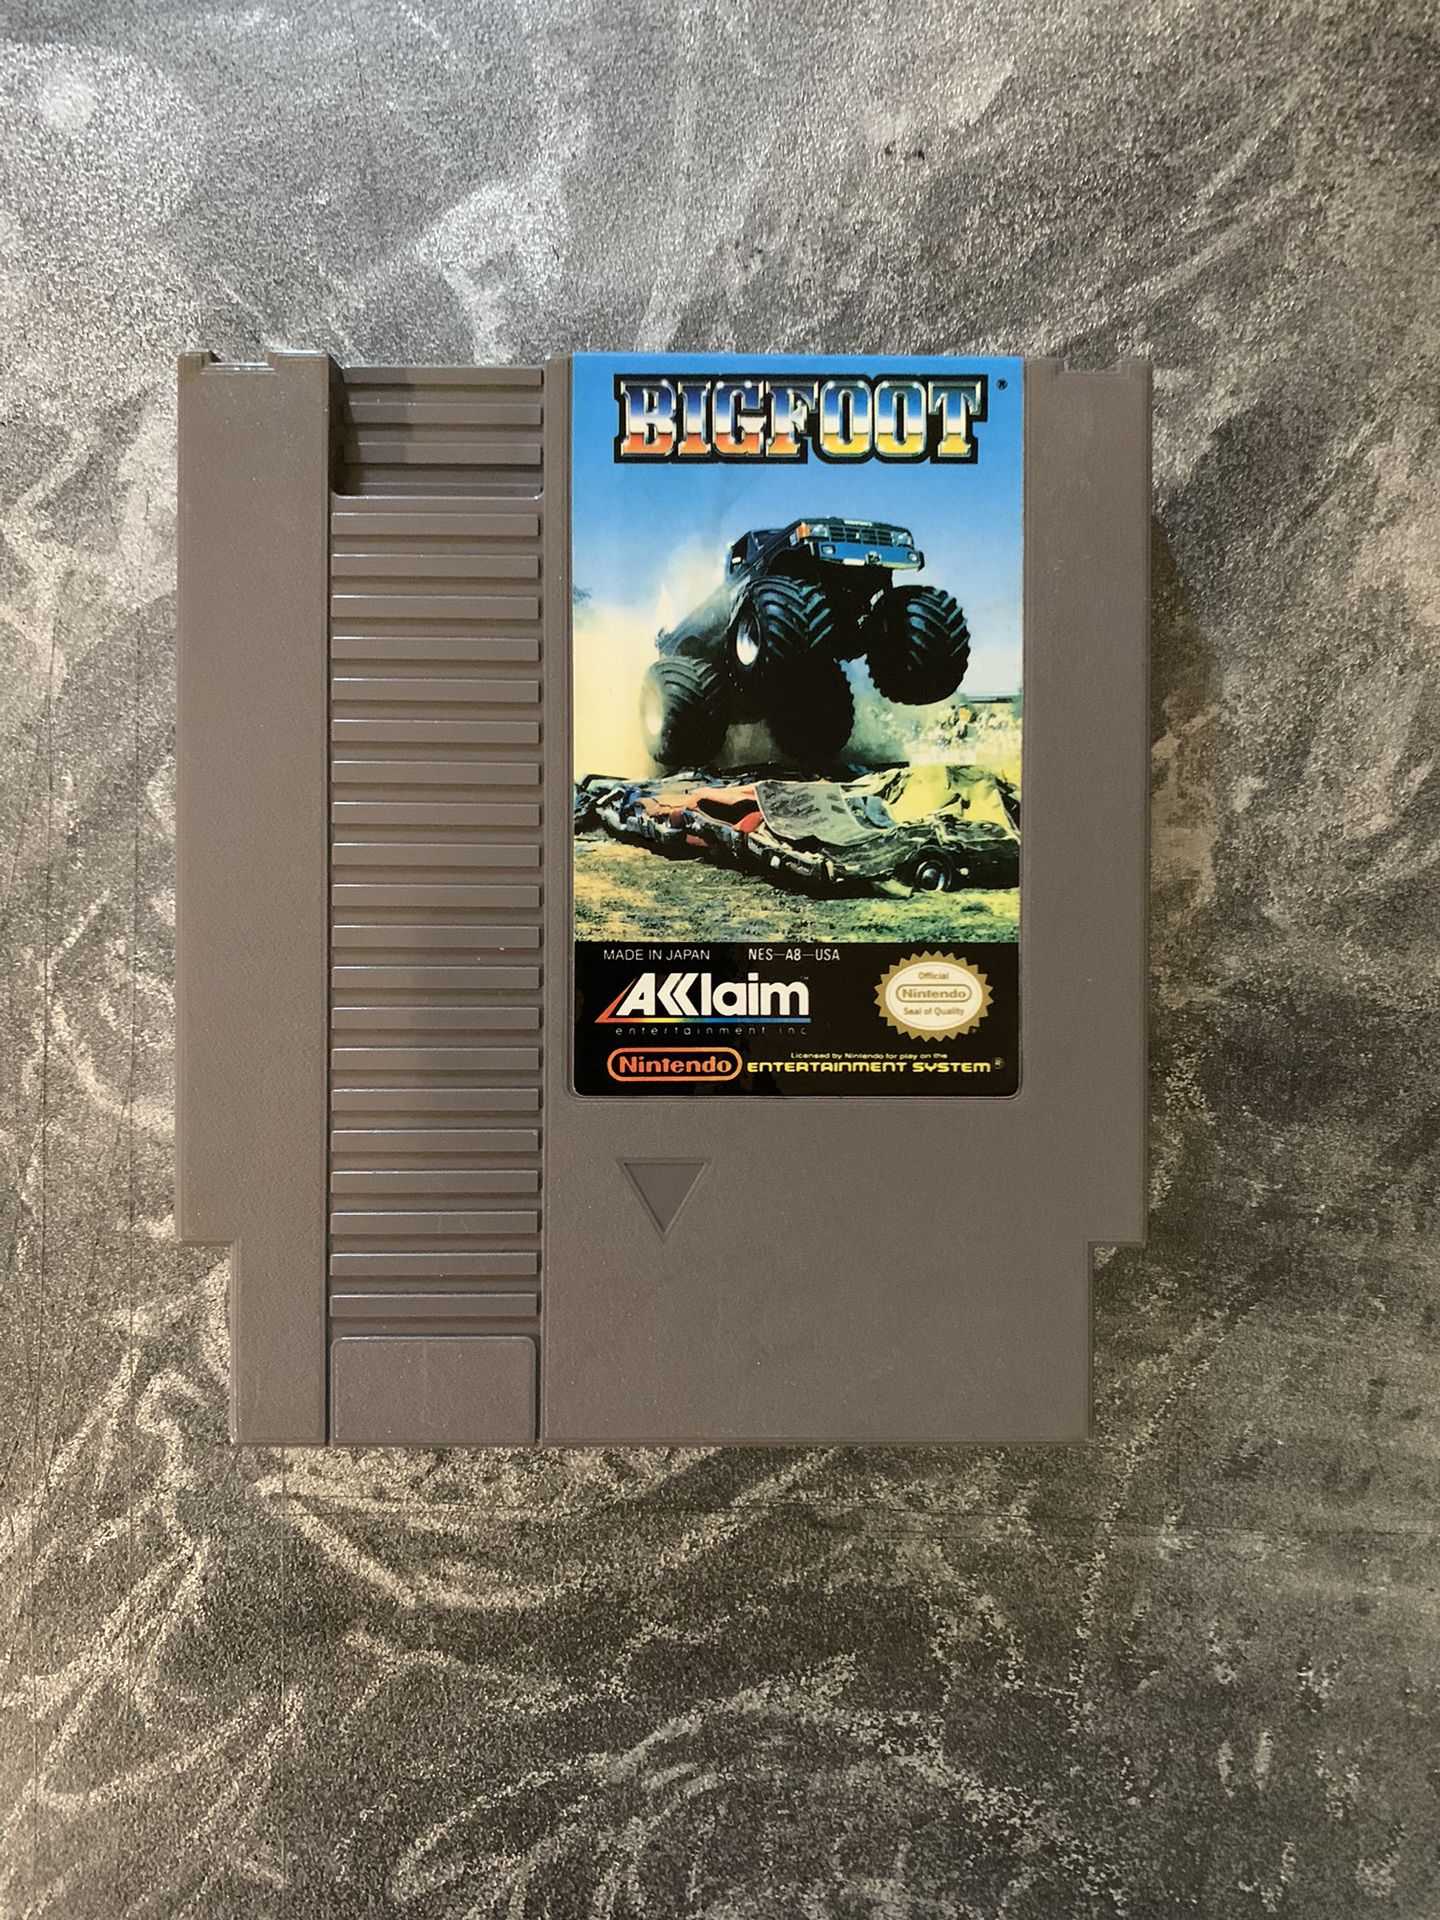 Bigfoot for Nintendo NES